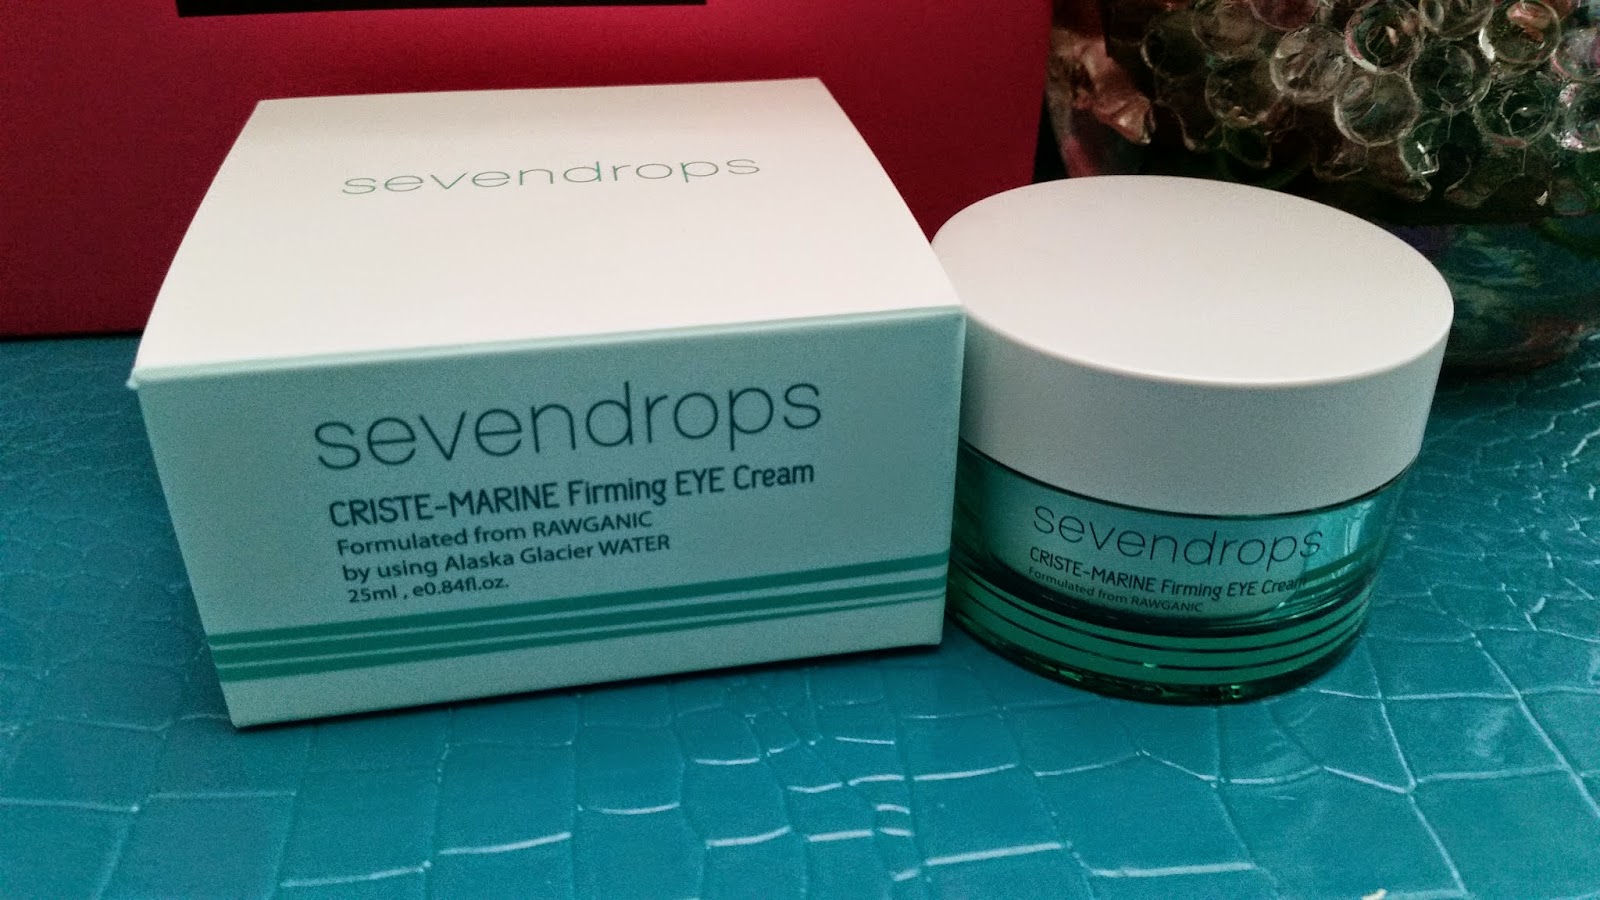 Sevendrops Criste-Marine Firming Eye Cream